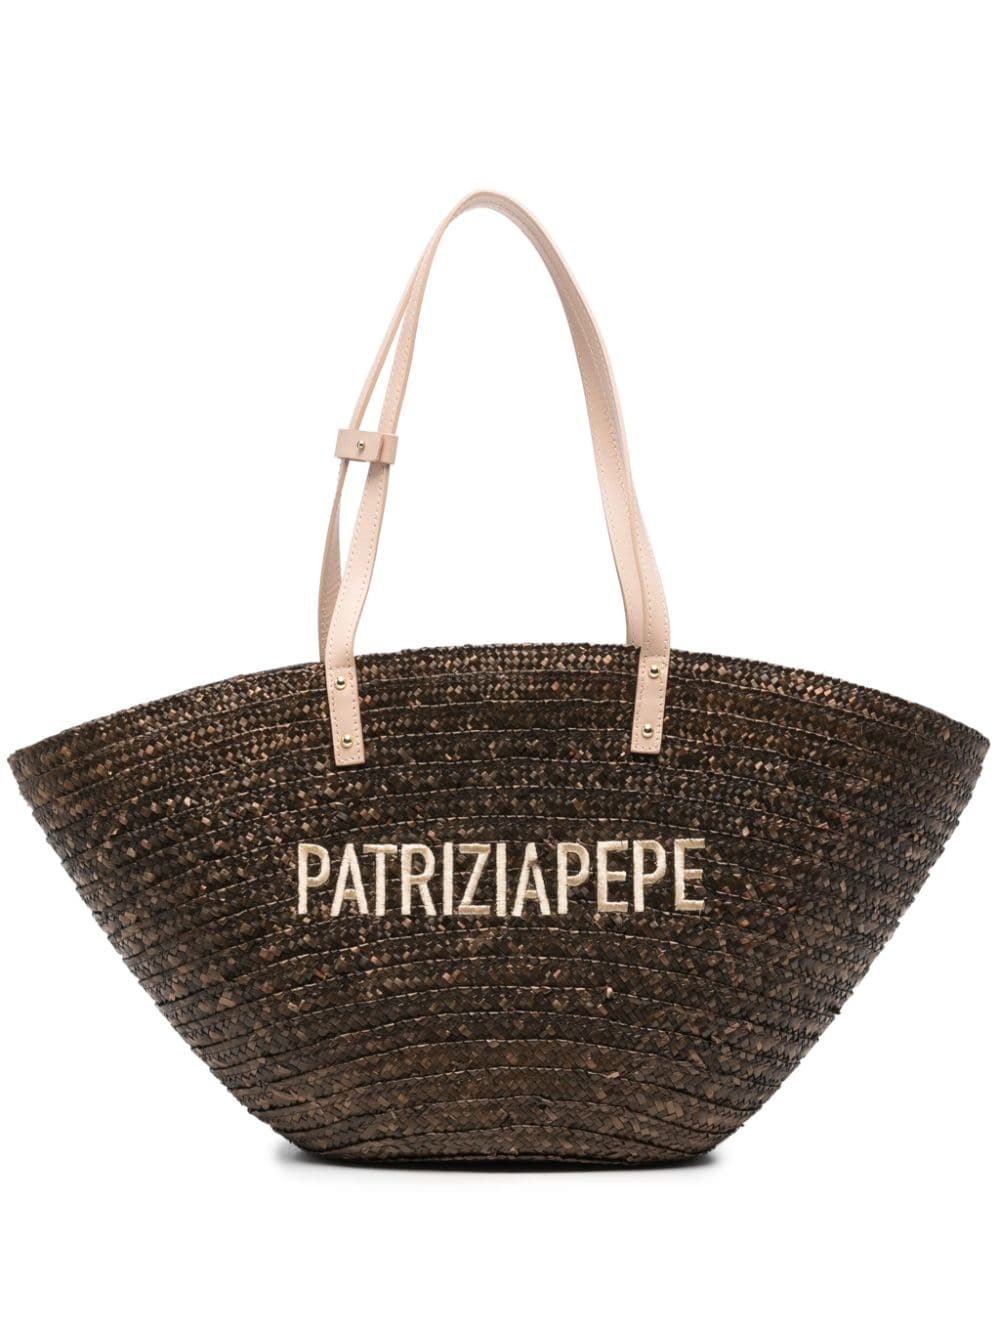 Patrizia Pepe logo-embroidered tote bag Bruin